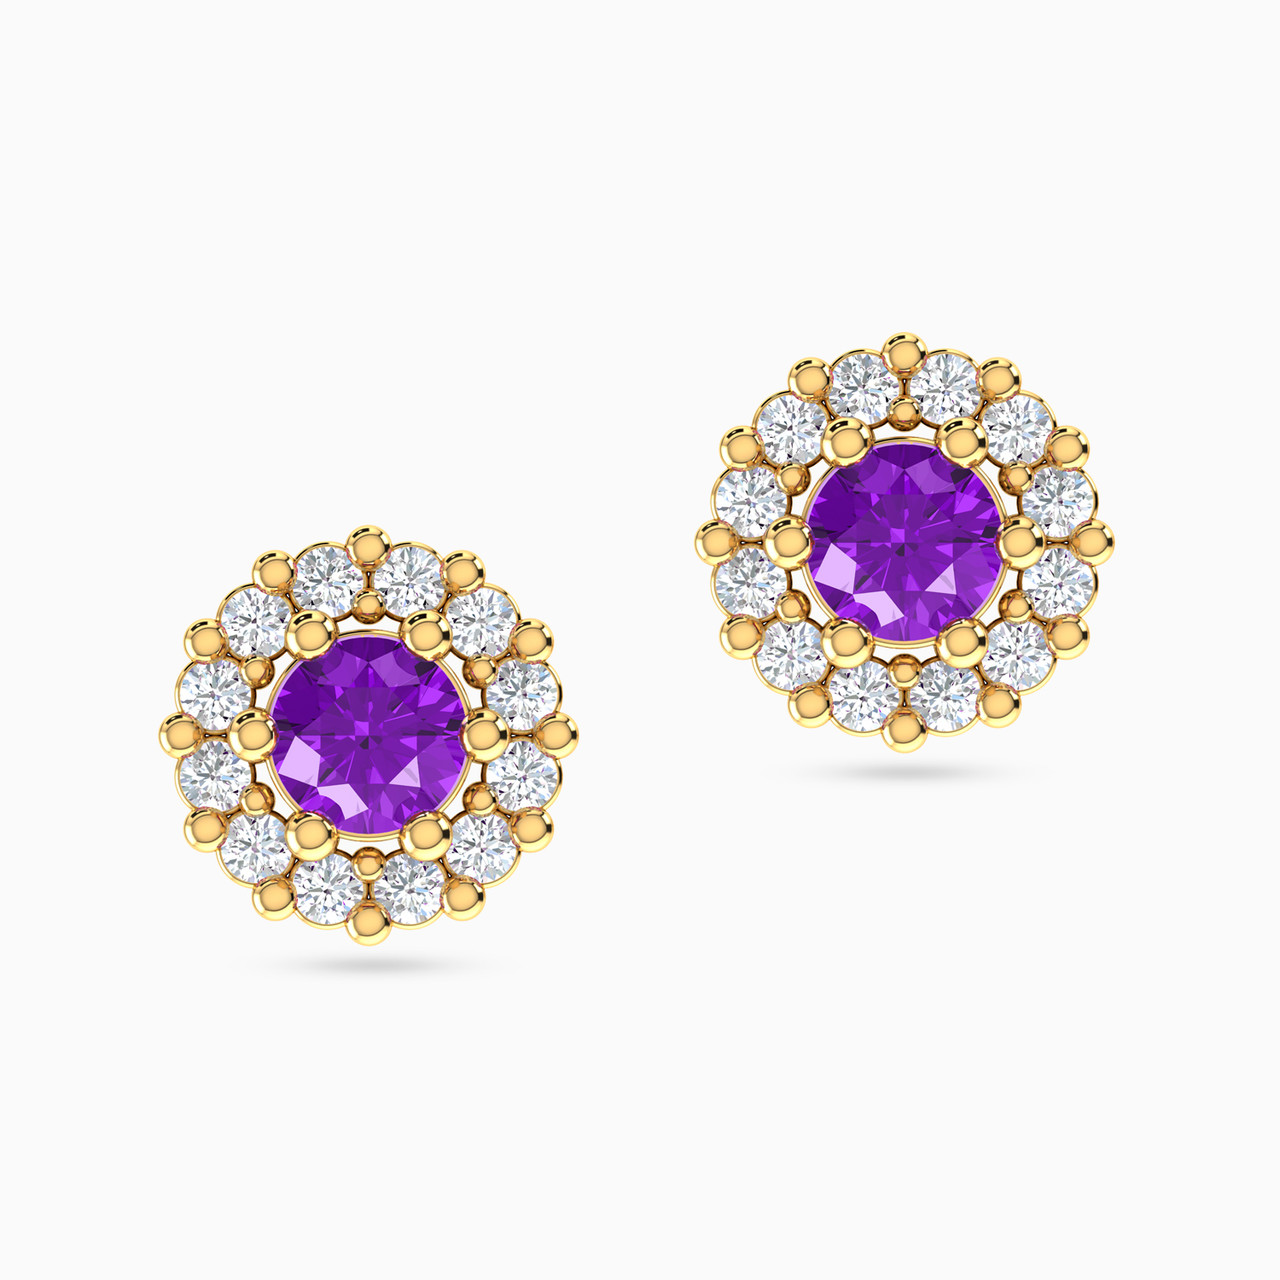 18K Gold Diamond & Colored Stones Stud Earrings